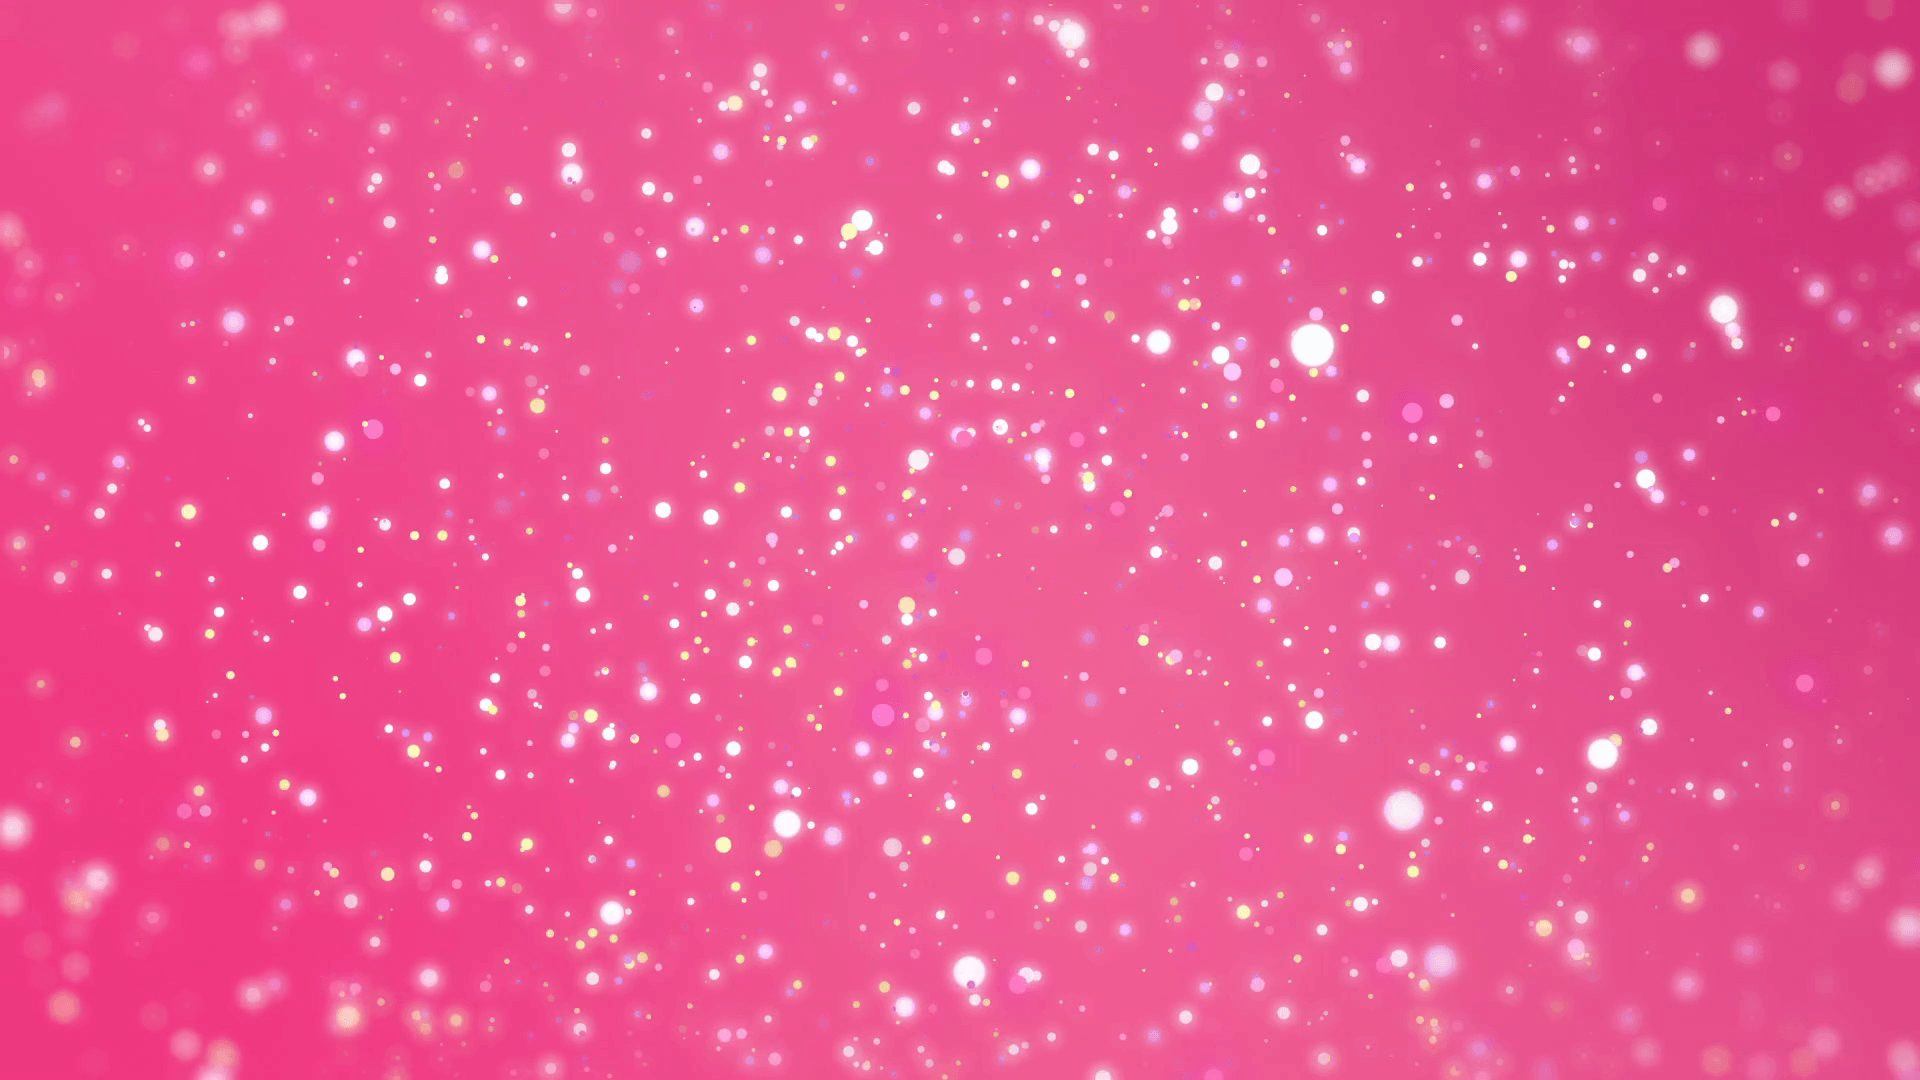 Valentines Day romantic dreamy pink glitter background